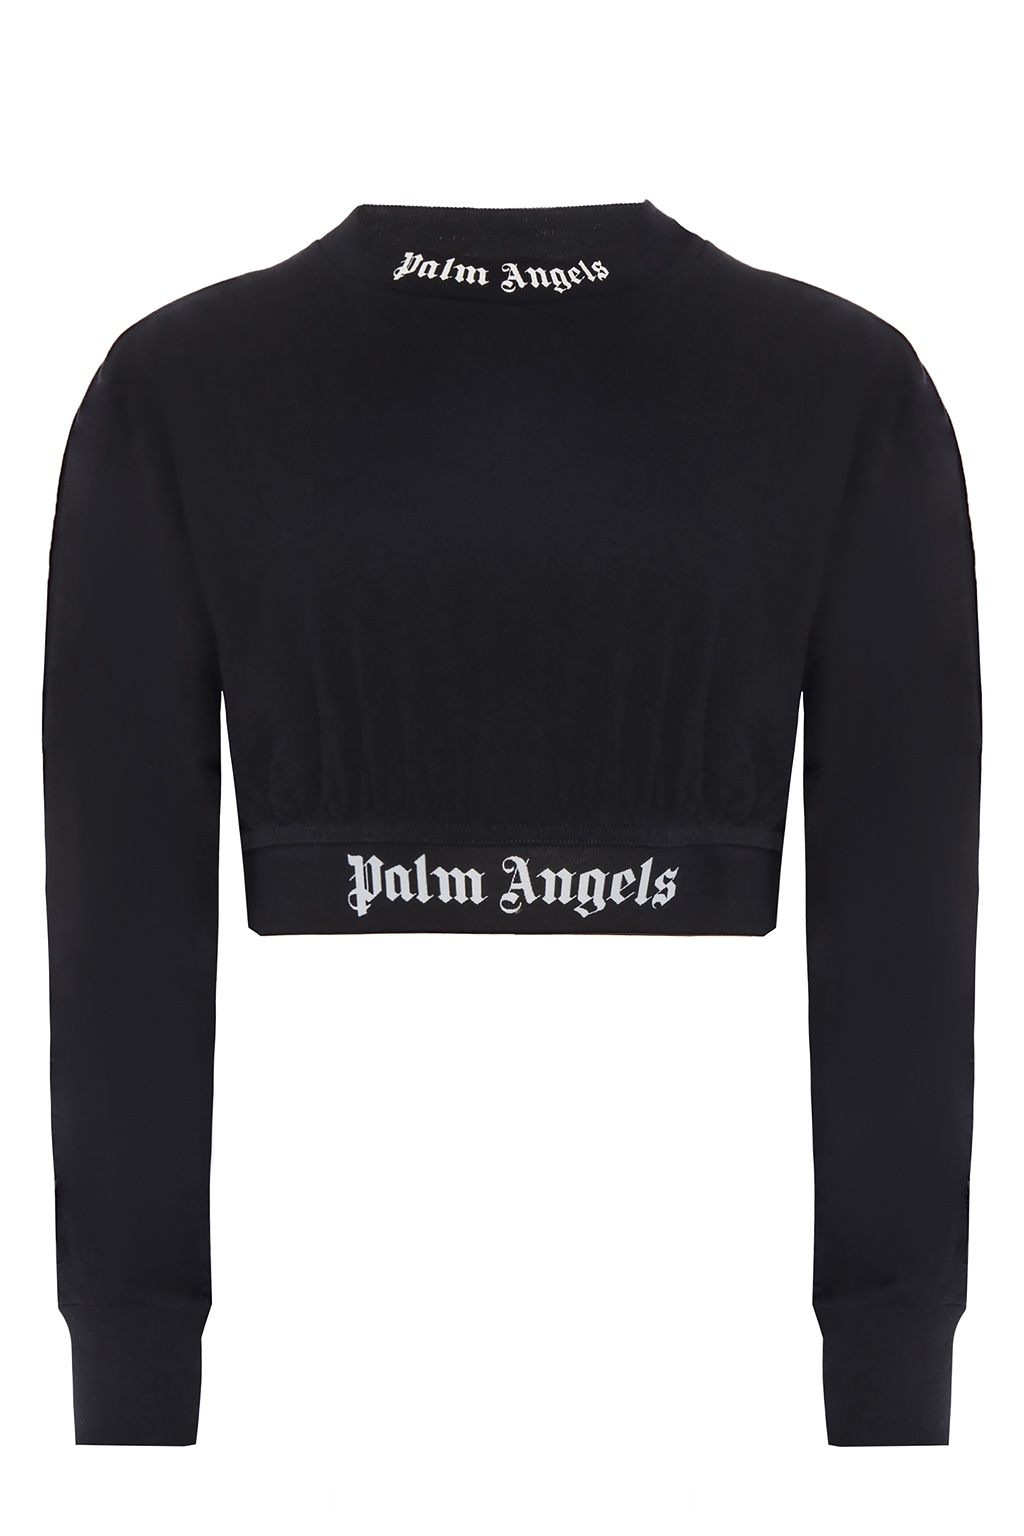 Palm Angels Long sleeve crop top | Women's Clothing | Vitkac